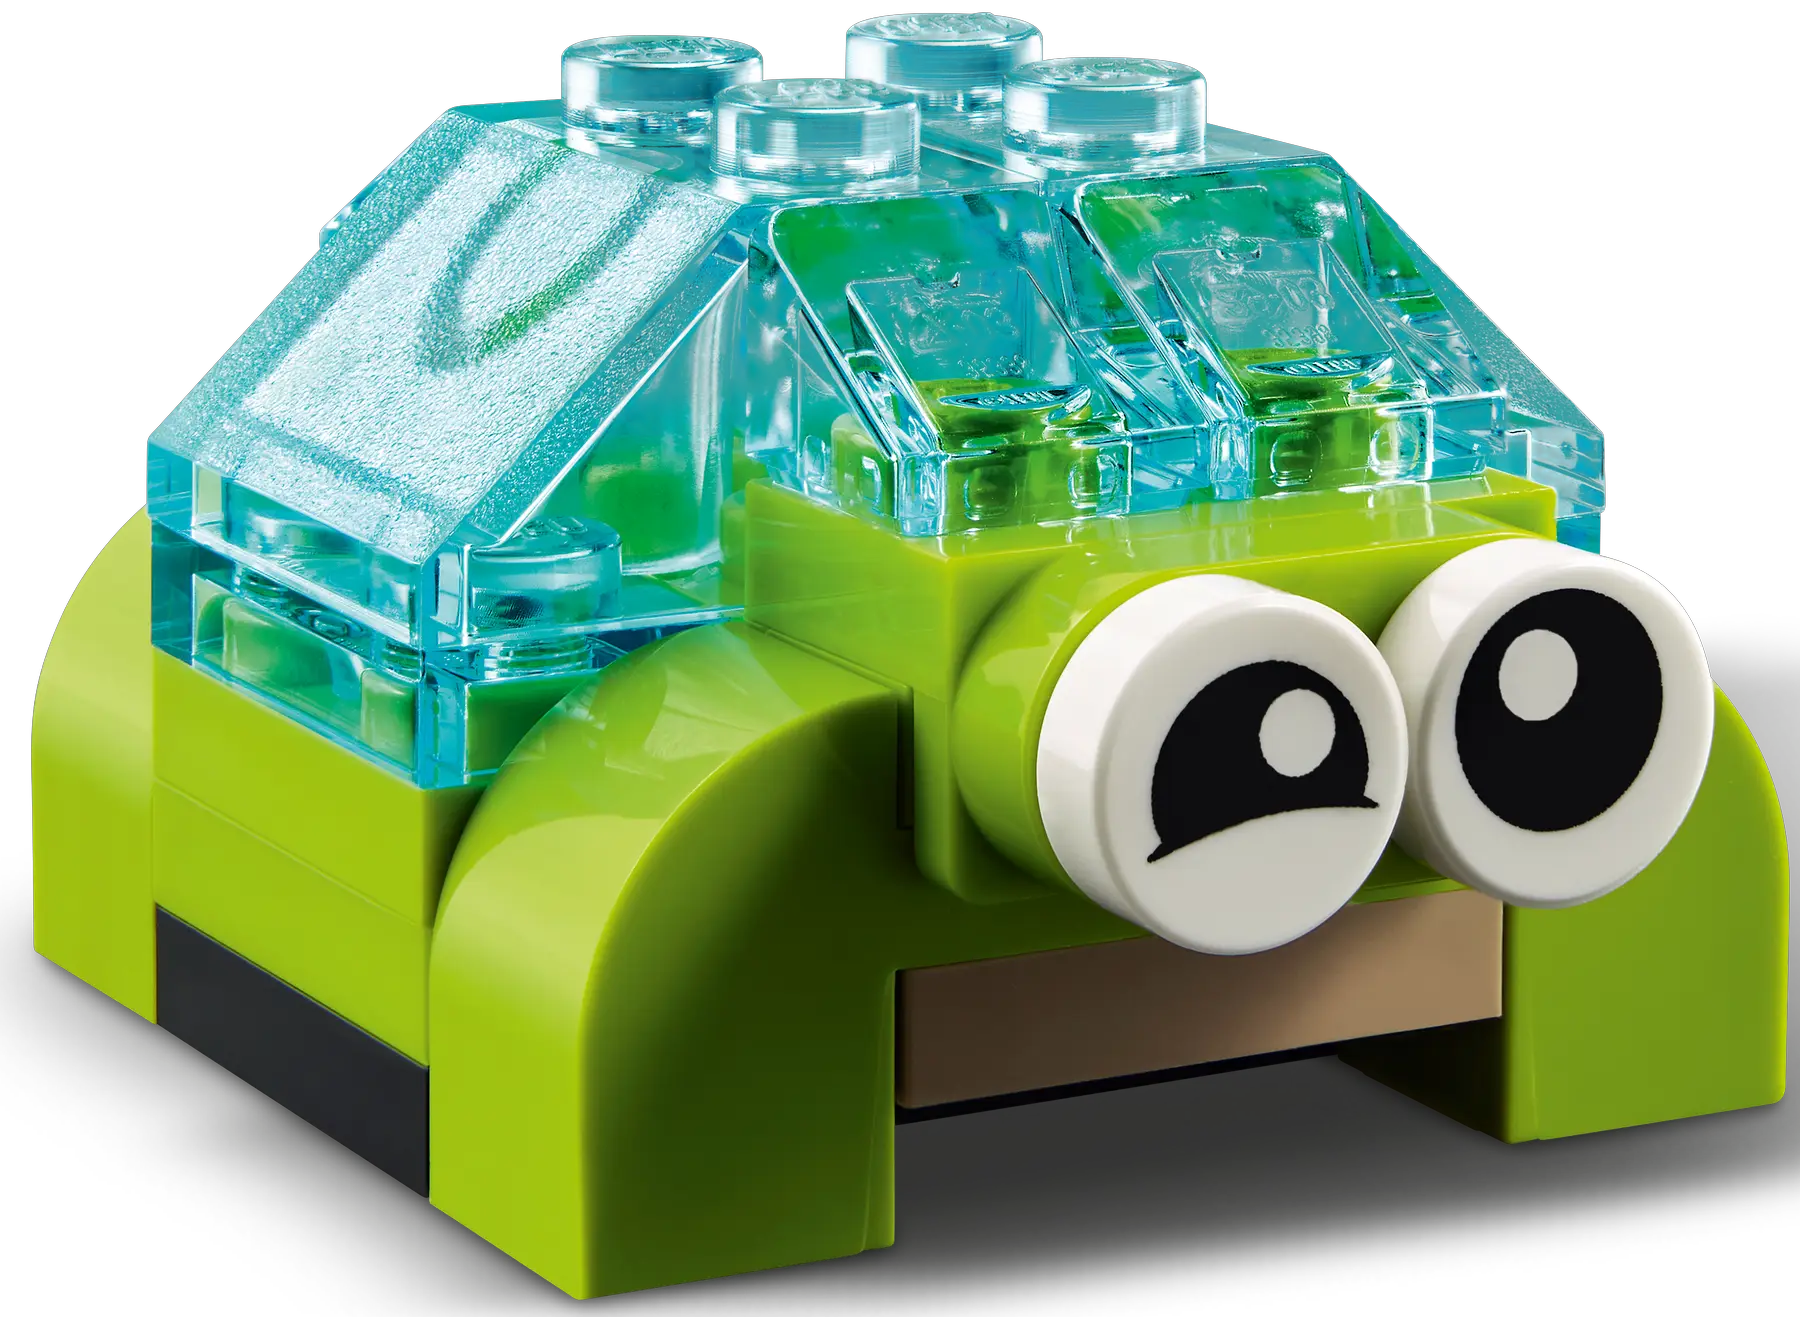 Lego Classic Creative Transparent Bricks